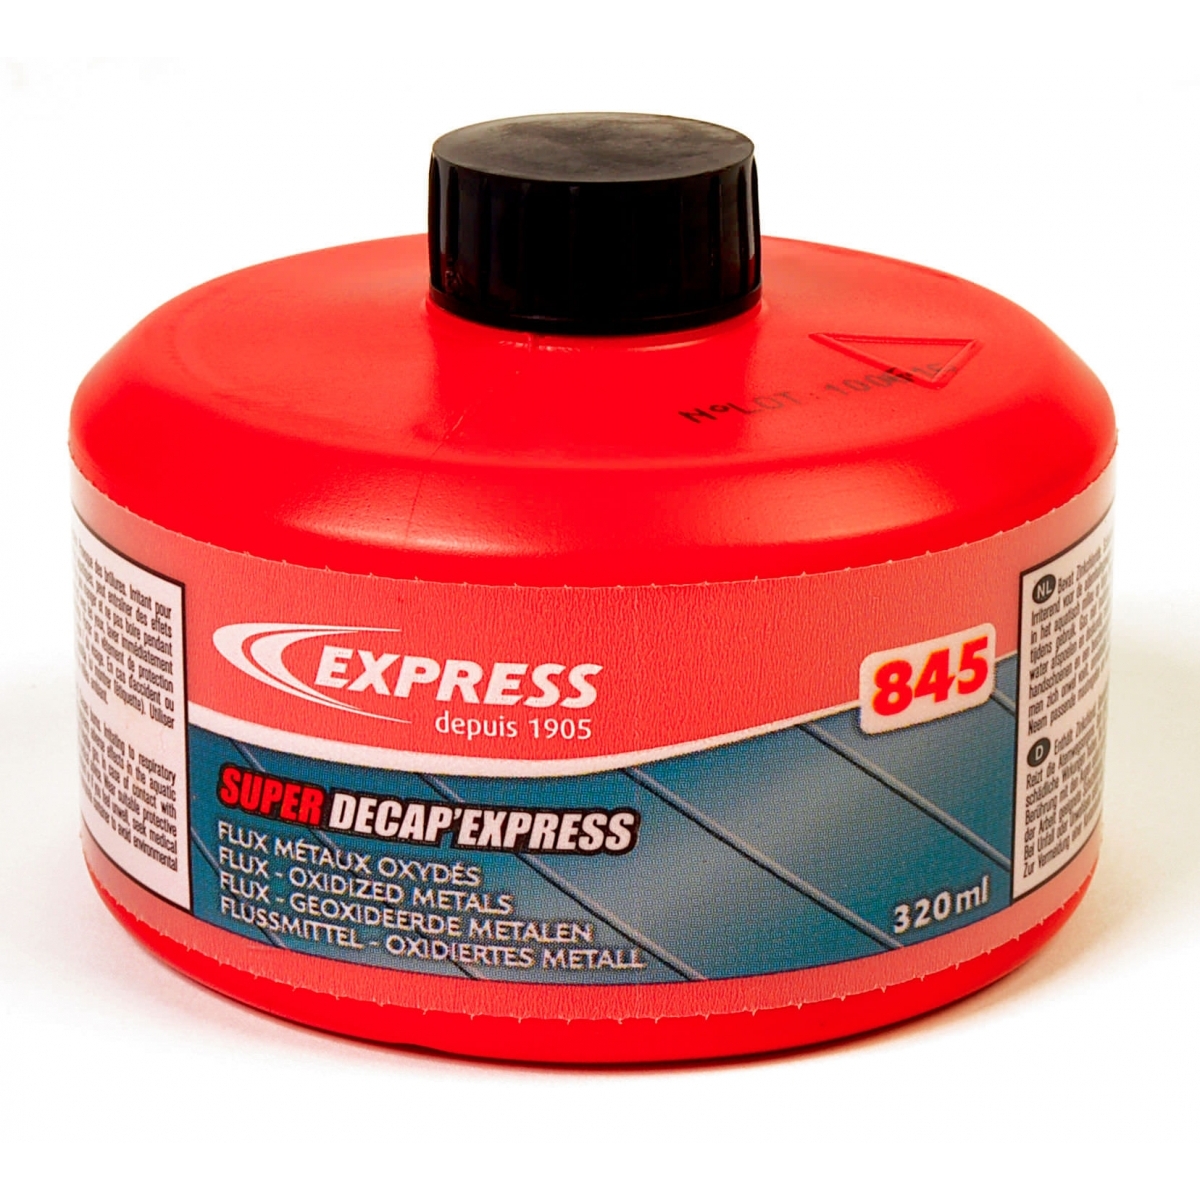 Express Letovací gel SUPER DECAP 320ml